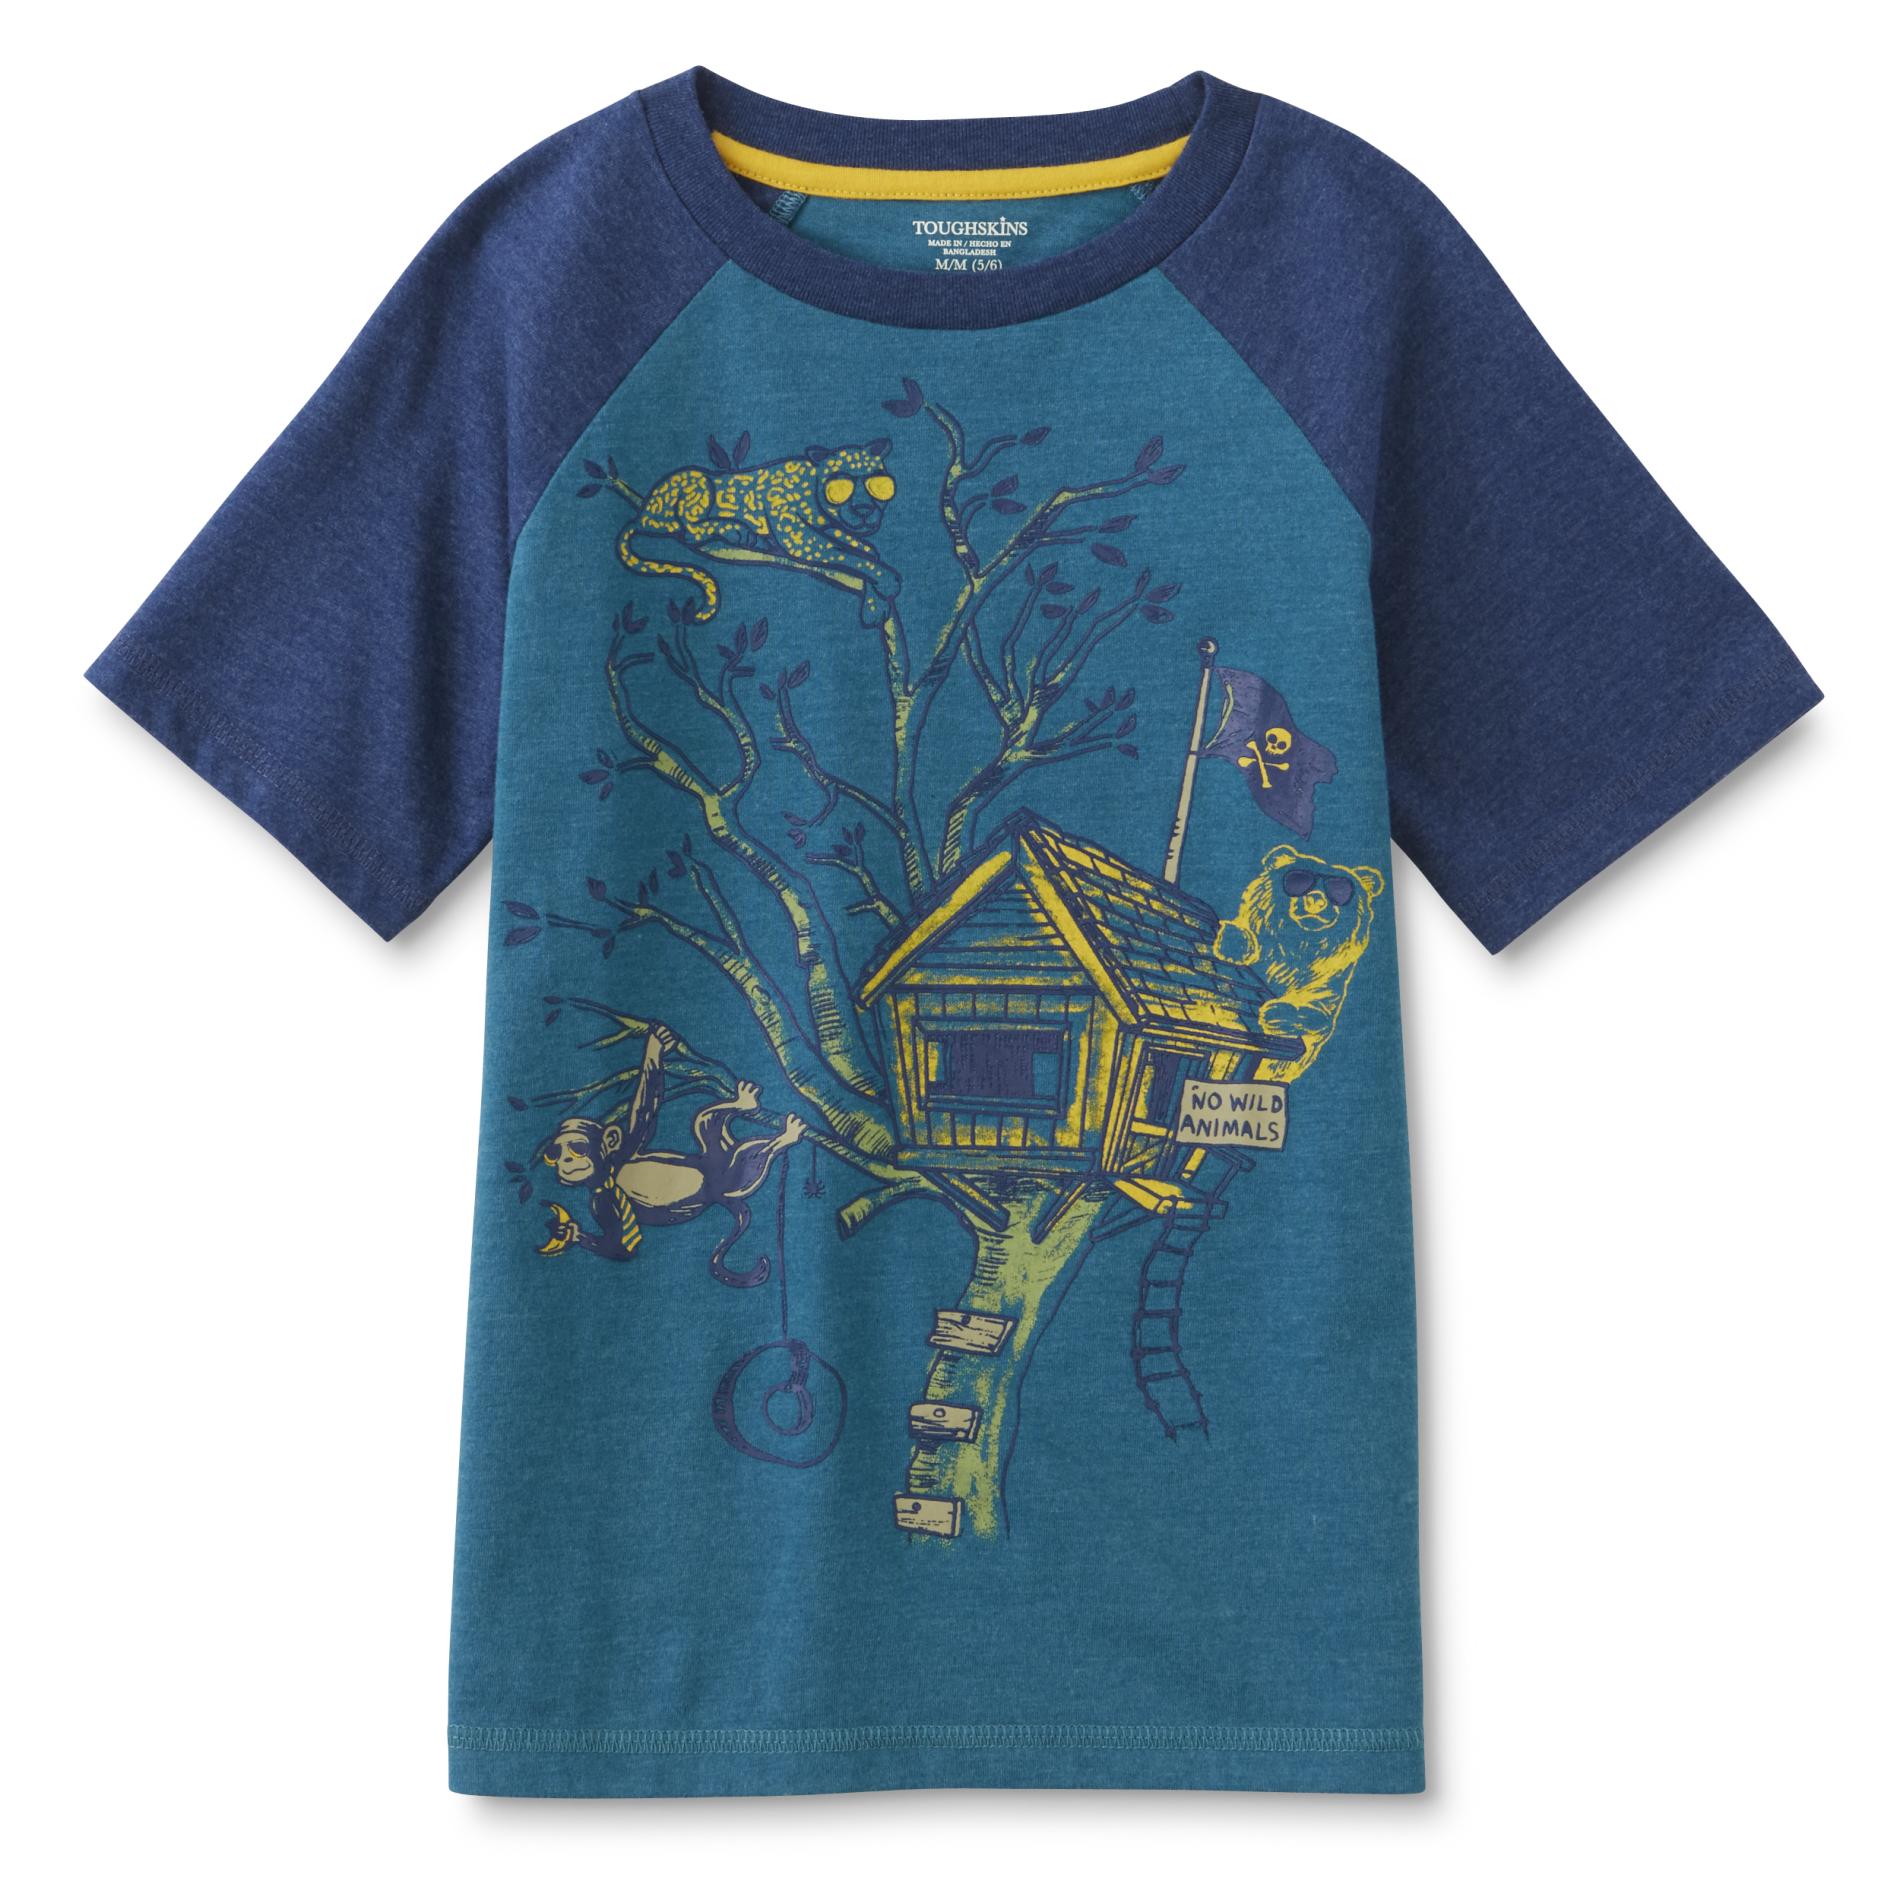 Toughskins Boy's Graphic T-Shirt - Tree House